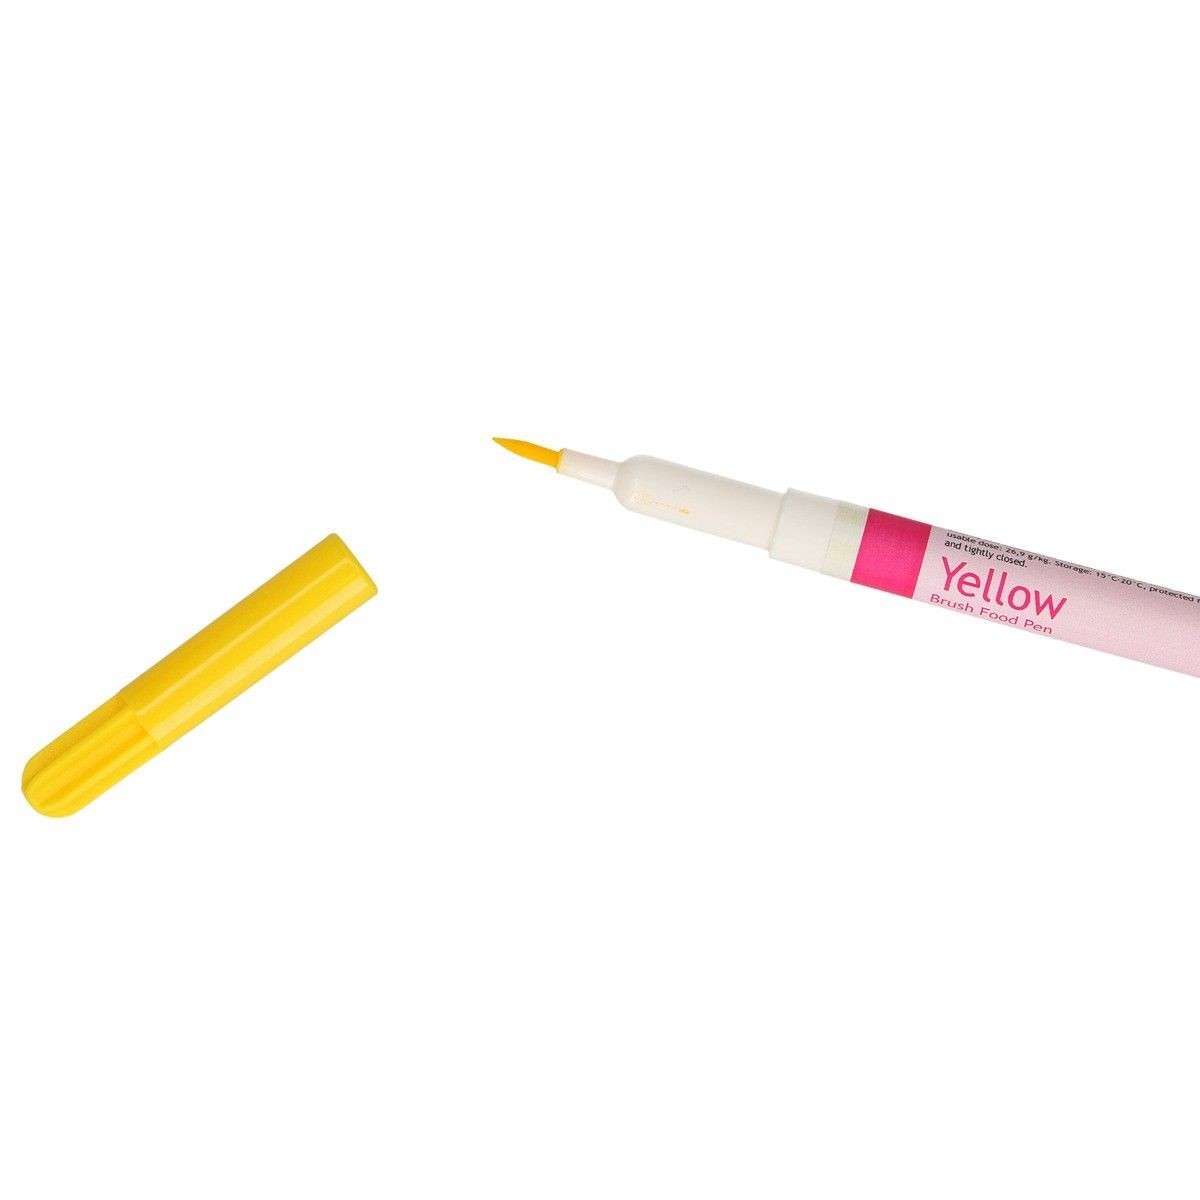 FunCakes Edible Brush Food Pen -YELLOW -Βρώσιμος Μαρκαδόρος με Μύτη Πινέλου -Κίτρινος